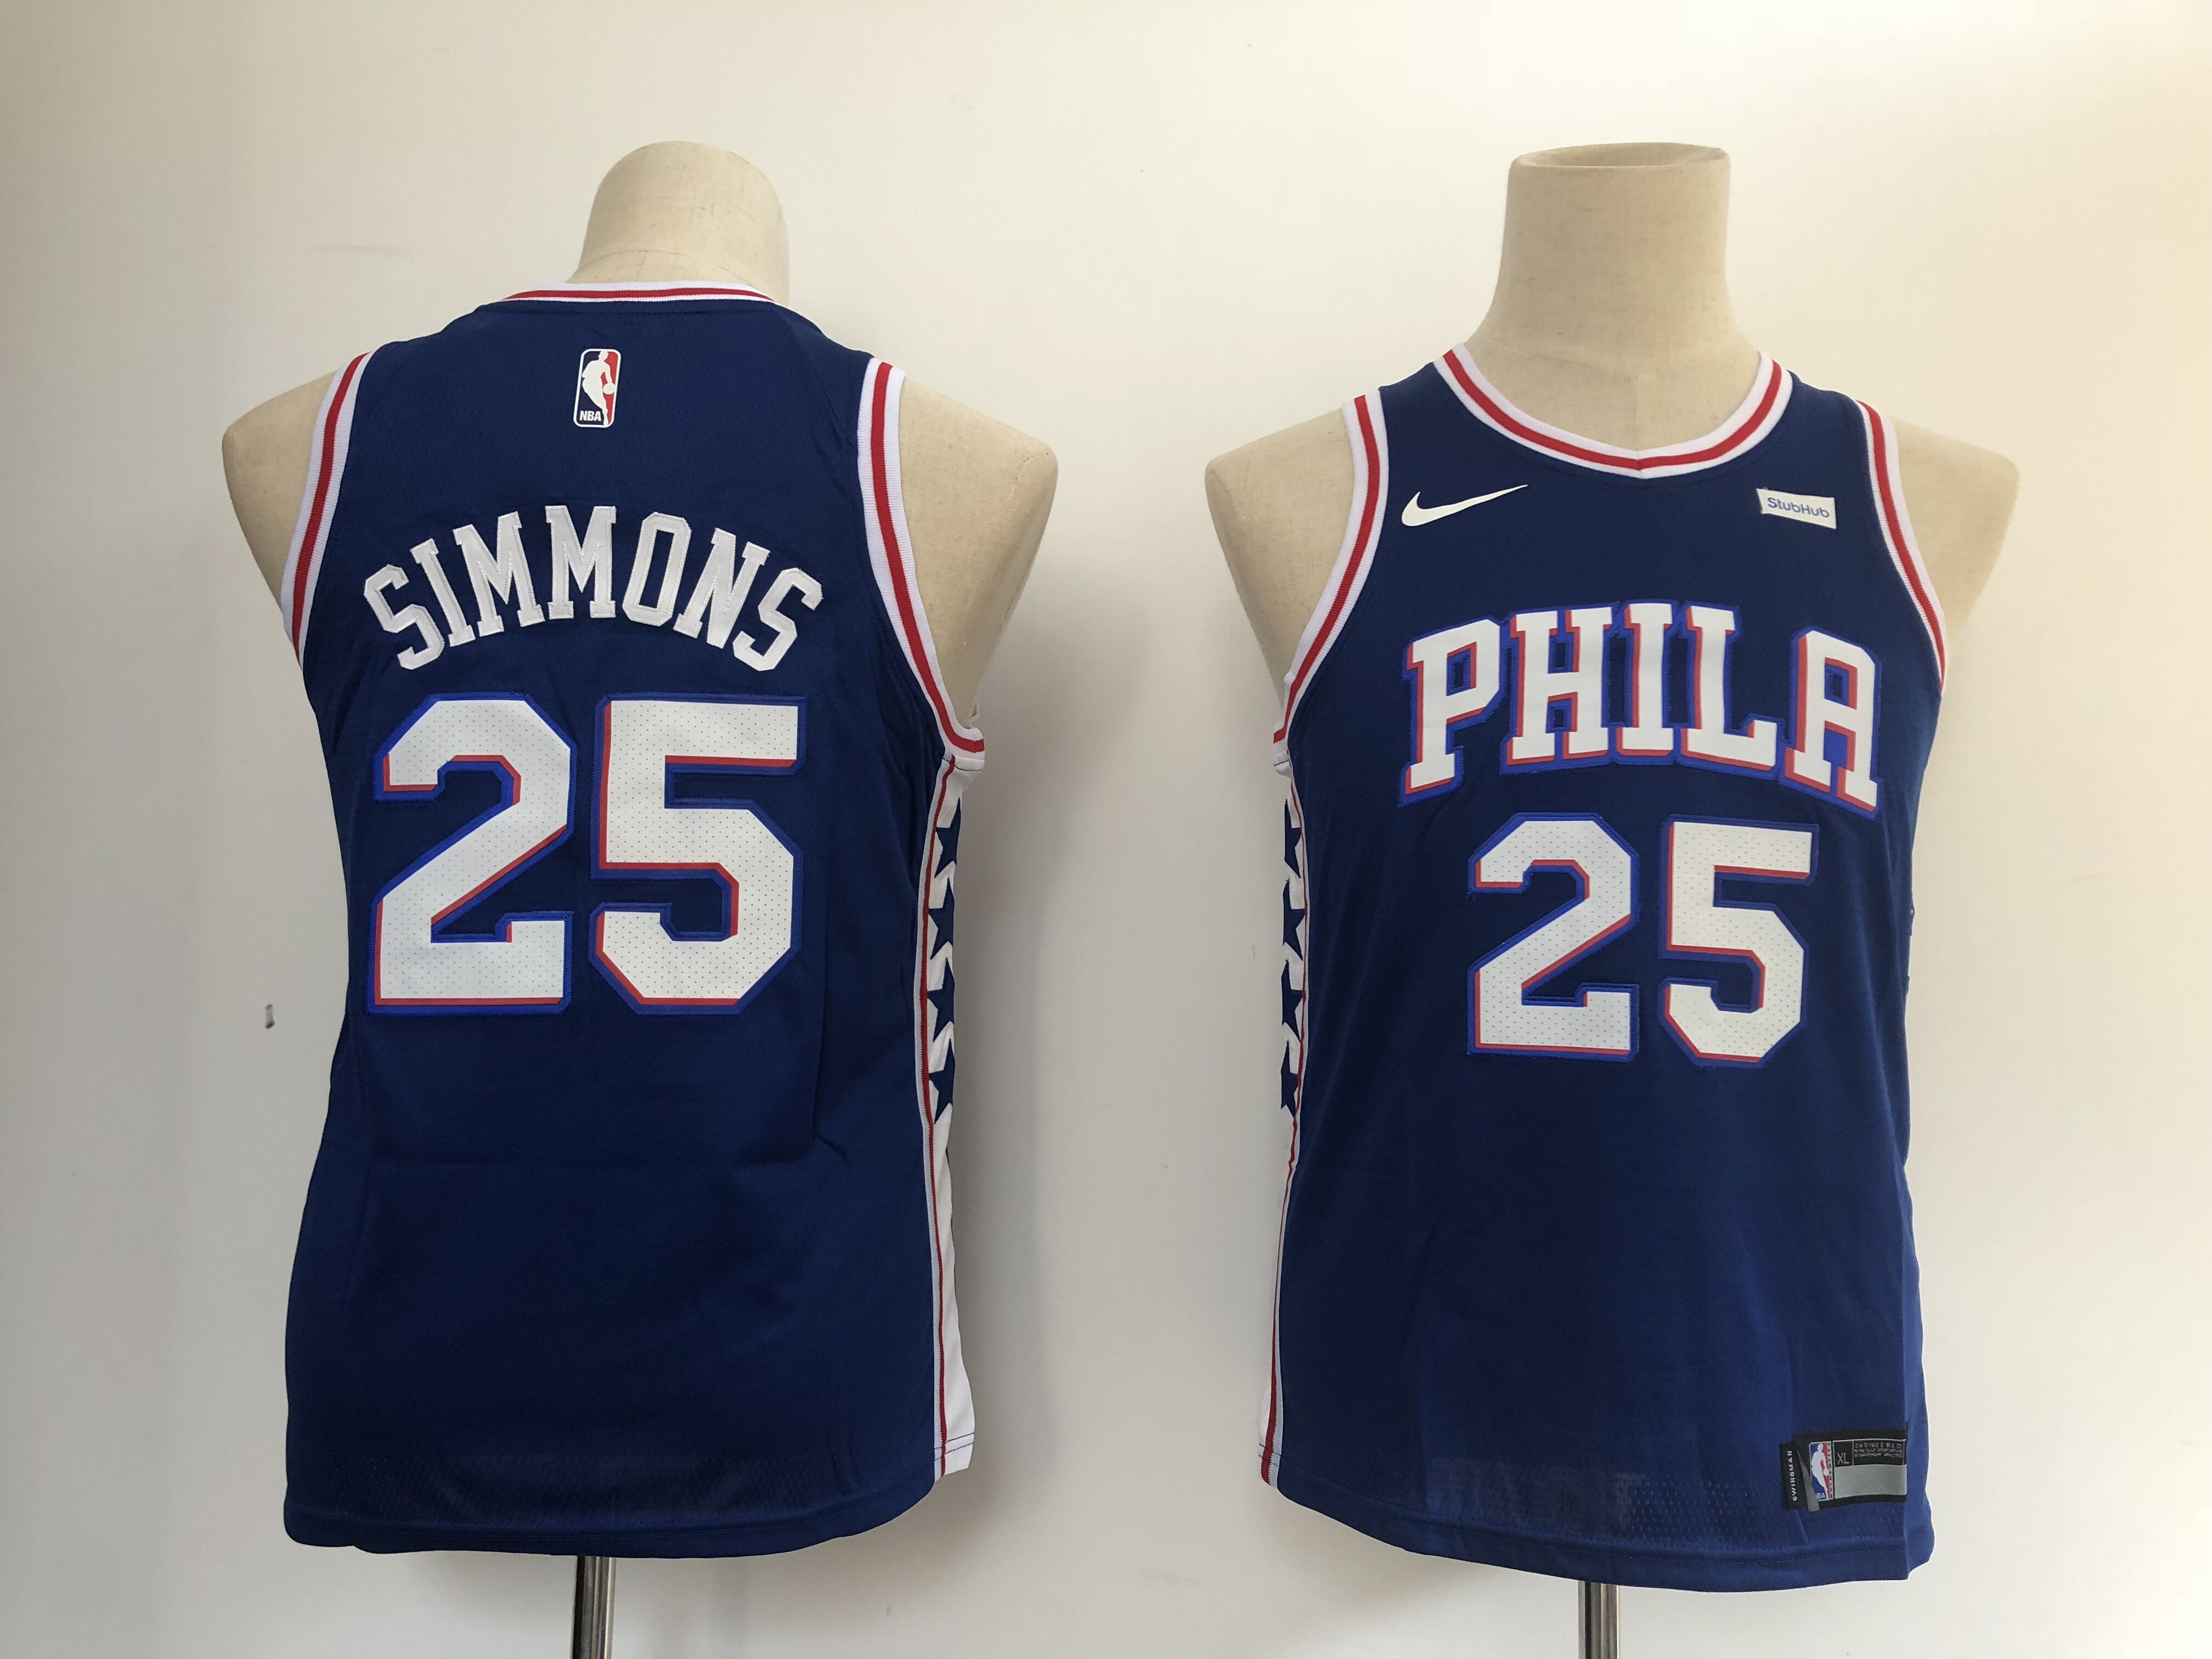 Youth Philadelphia 76ers 25 Simmons blue Nike NBA Jerseys